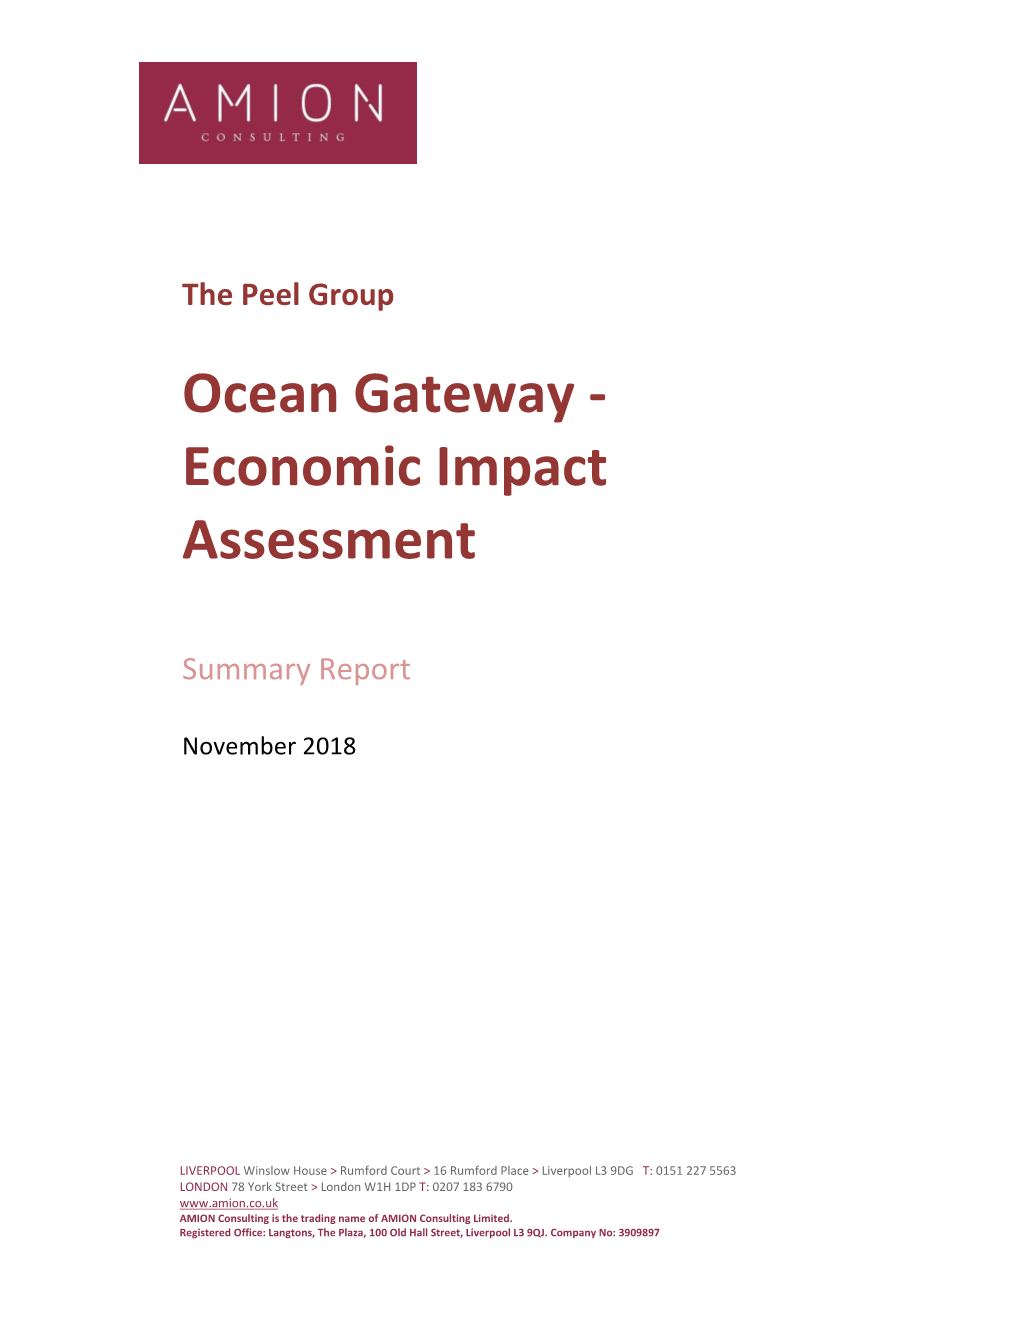 Amion Report Ocean Gateway